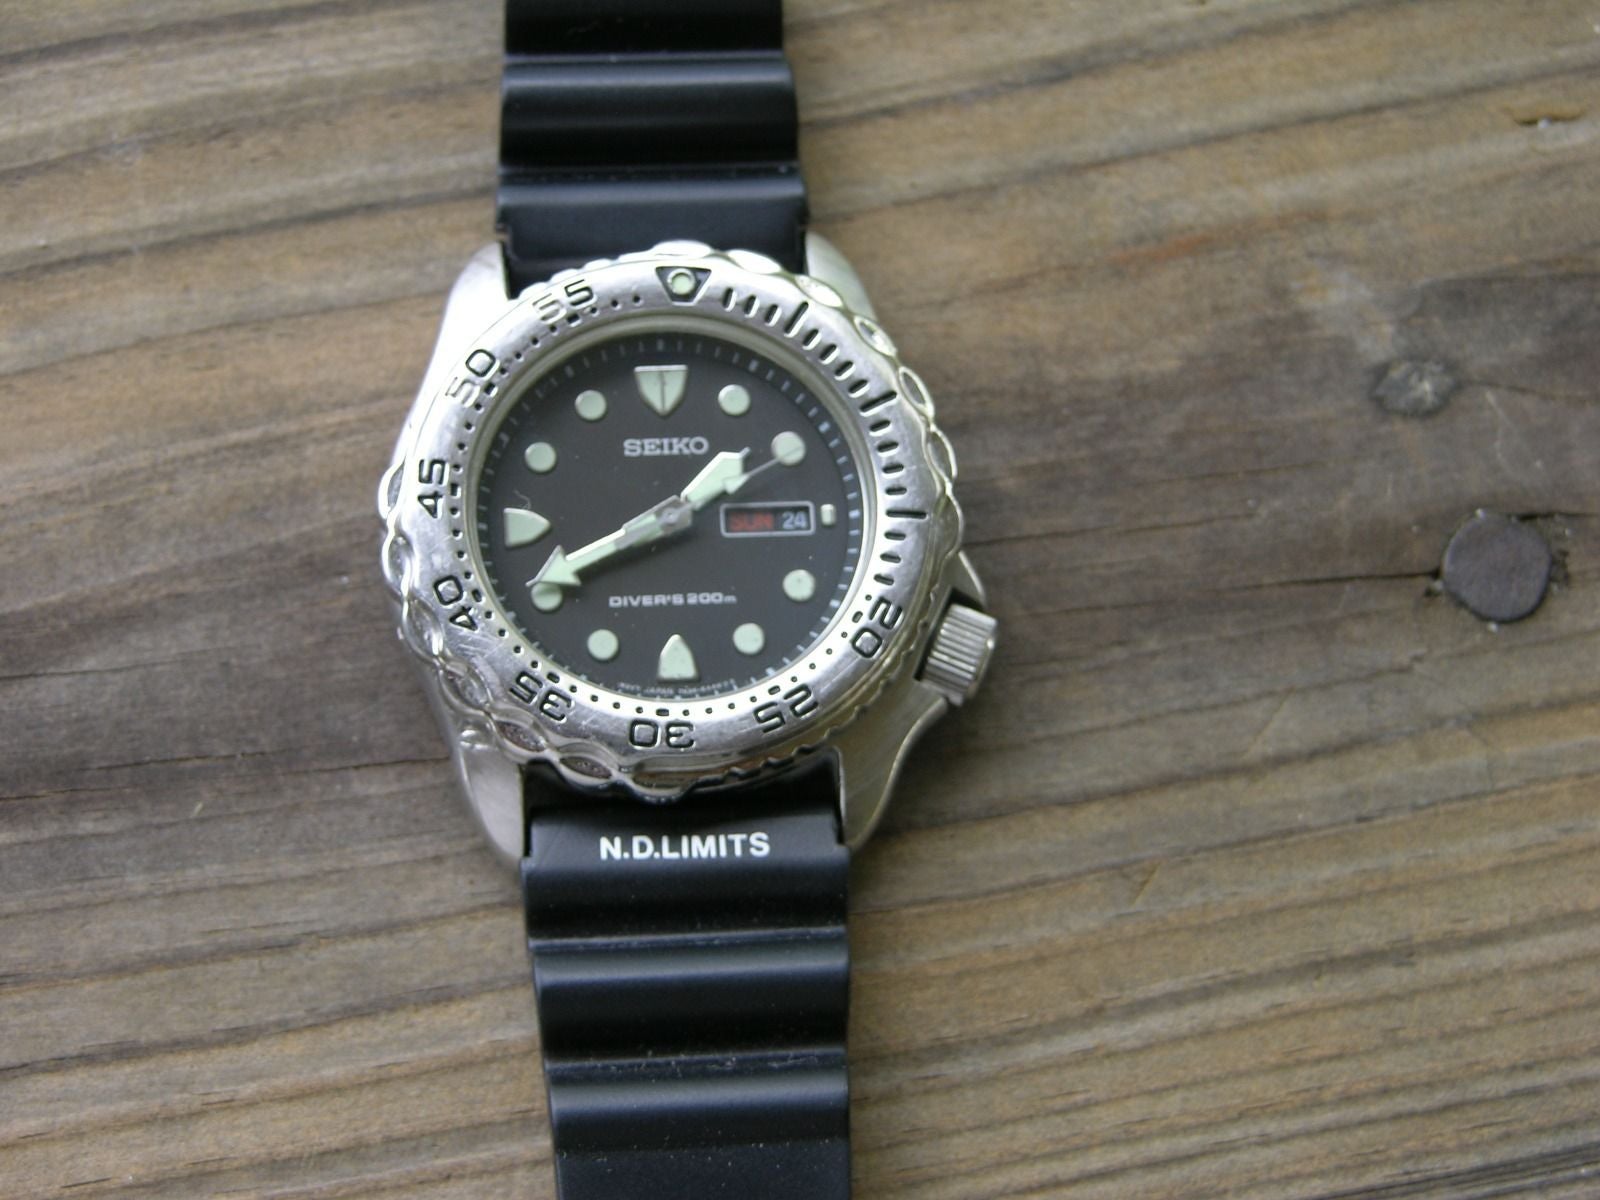 Seiko Men's Diver Watch SHC039...Seiko Divers Watch model #7N36-6A40 |  WatchUSeek Watch Forums